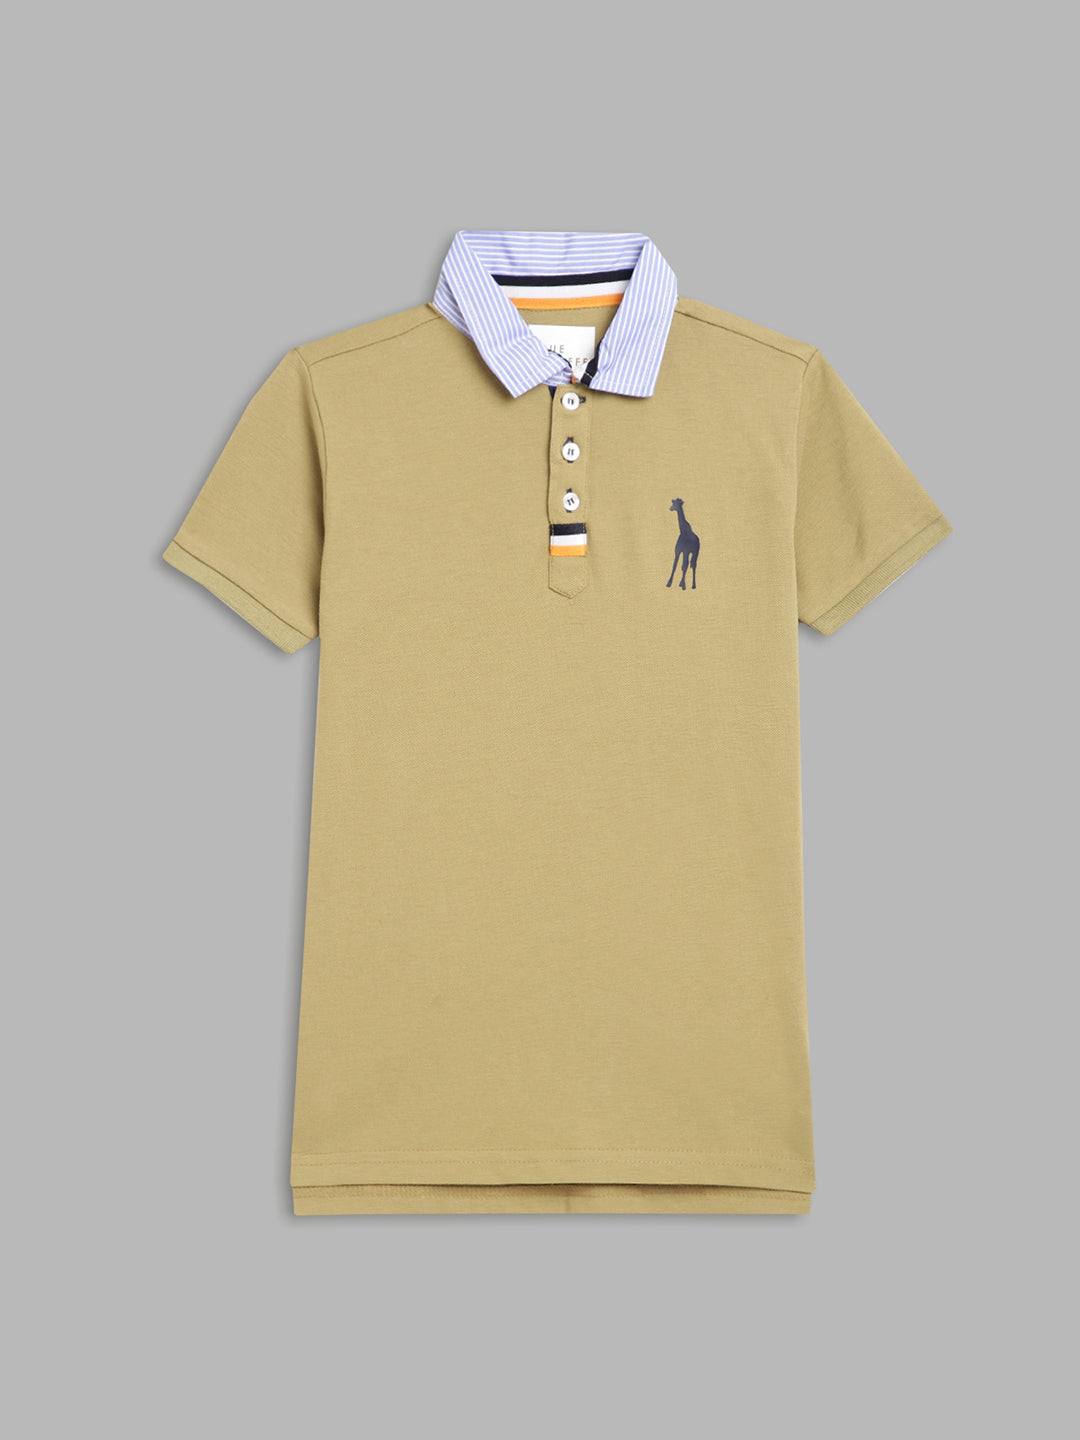 Blue Giraffe Boys Olive Solid Polo TShirt